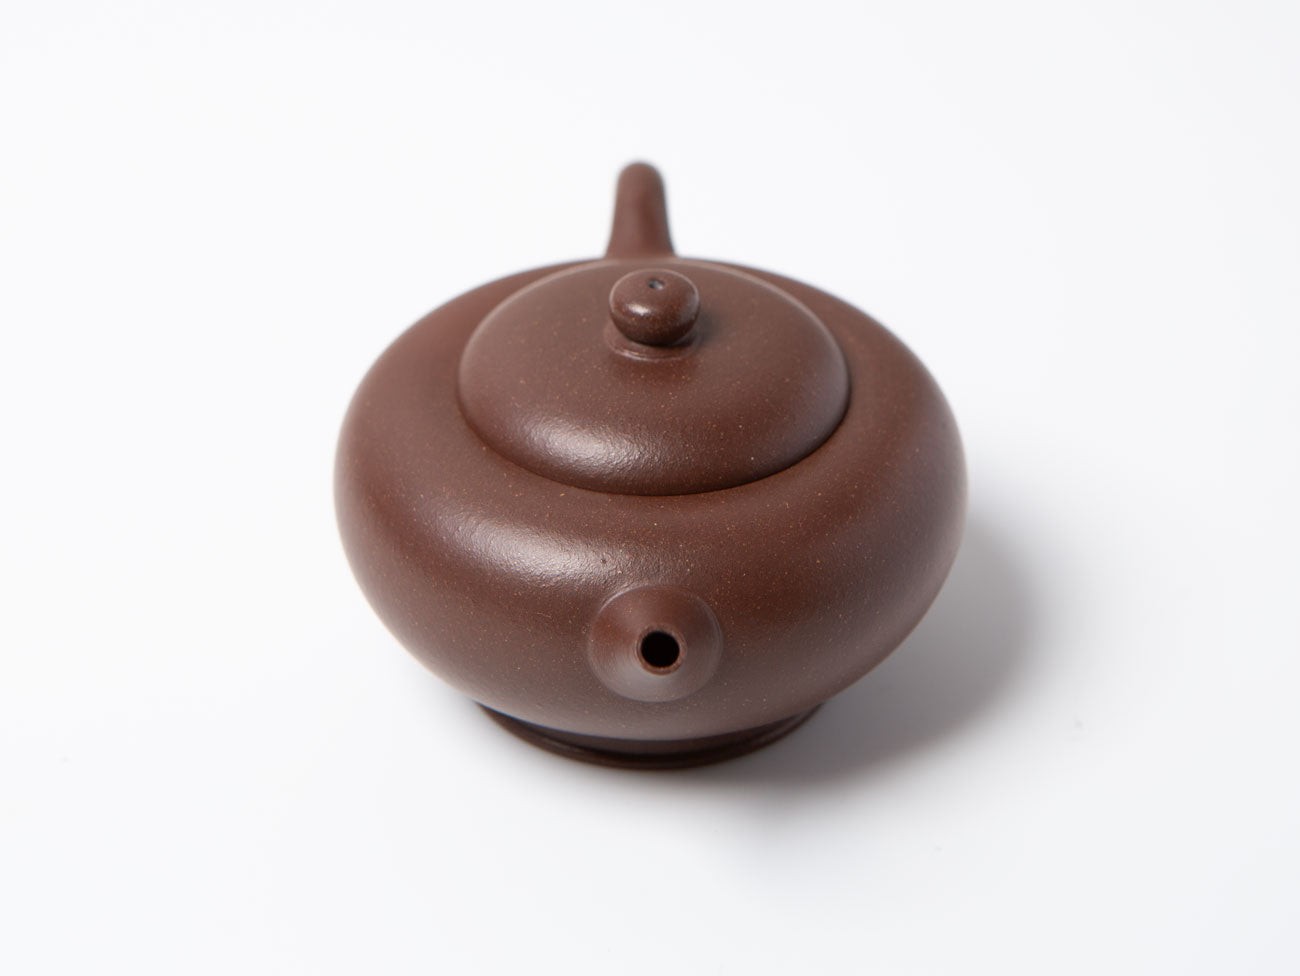 Bead. Zisha teapot hand-built with aged zini.